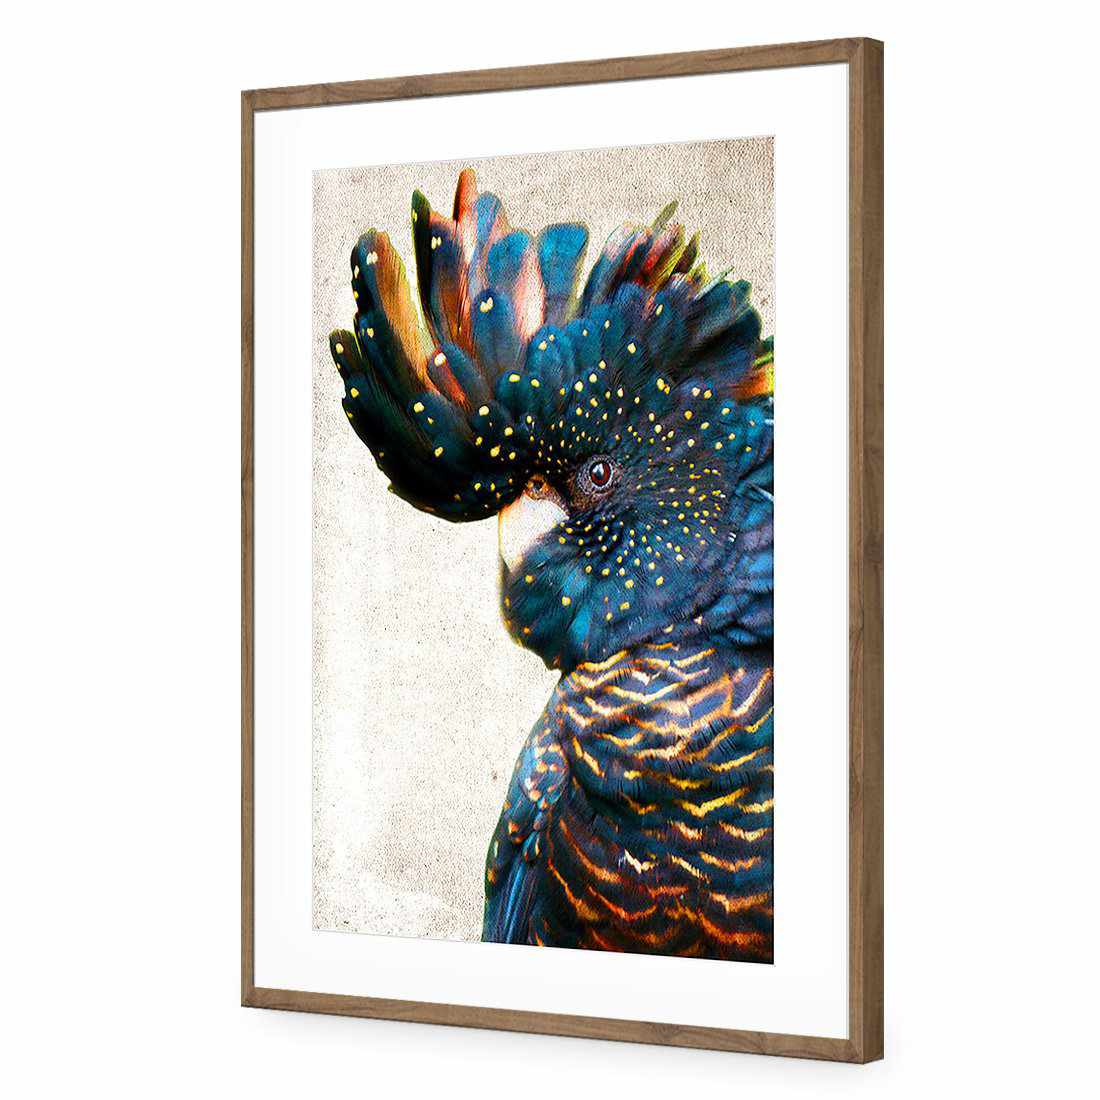 Black Cockatoo Side, Grunge Acrylic Glass Art-Acrylic-Wall Art Designs-With Border-Acrylic - Natural Frame-45x30cm-Wall Art Designs